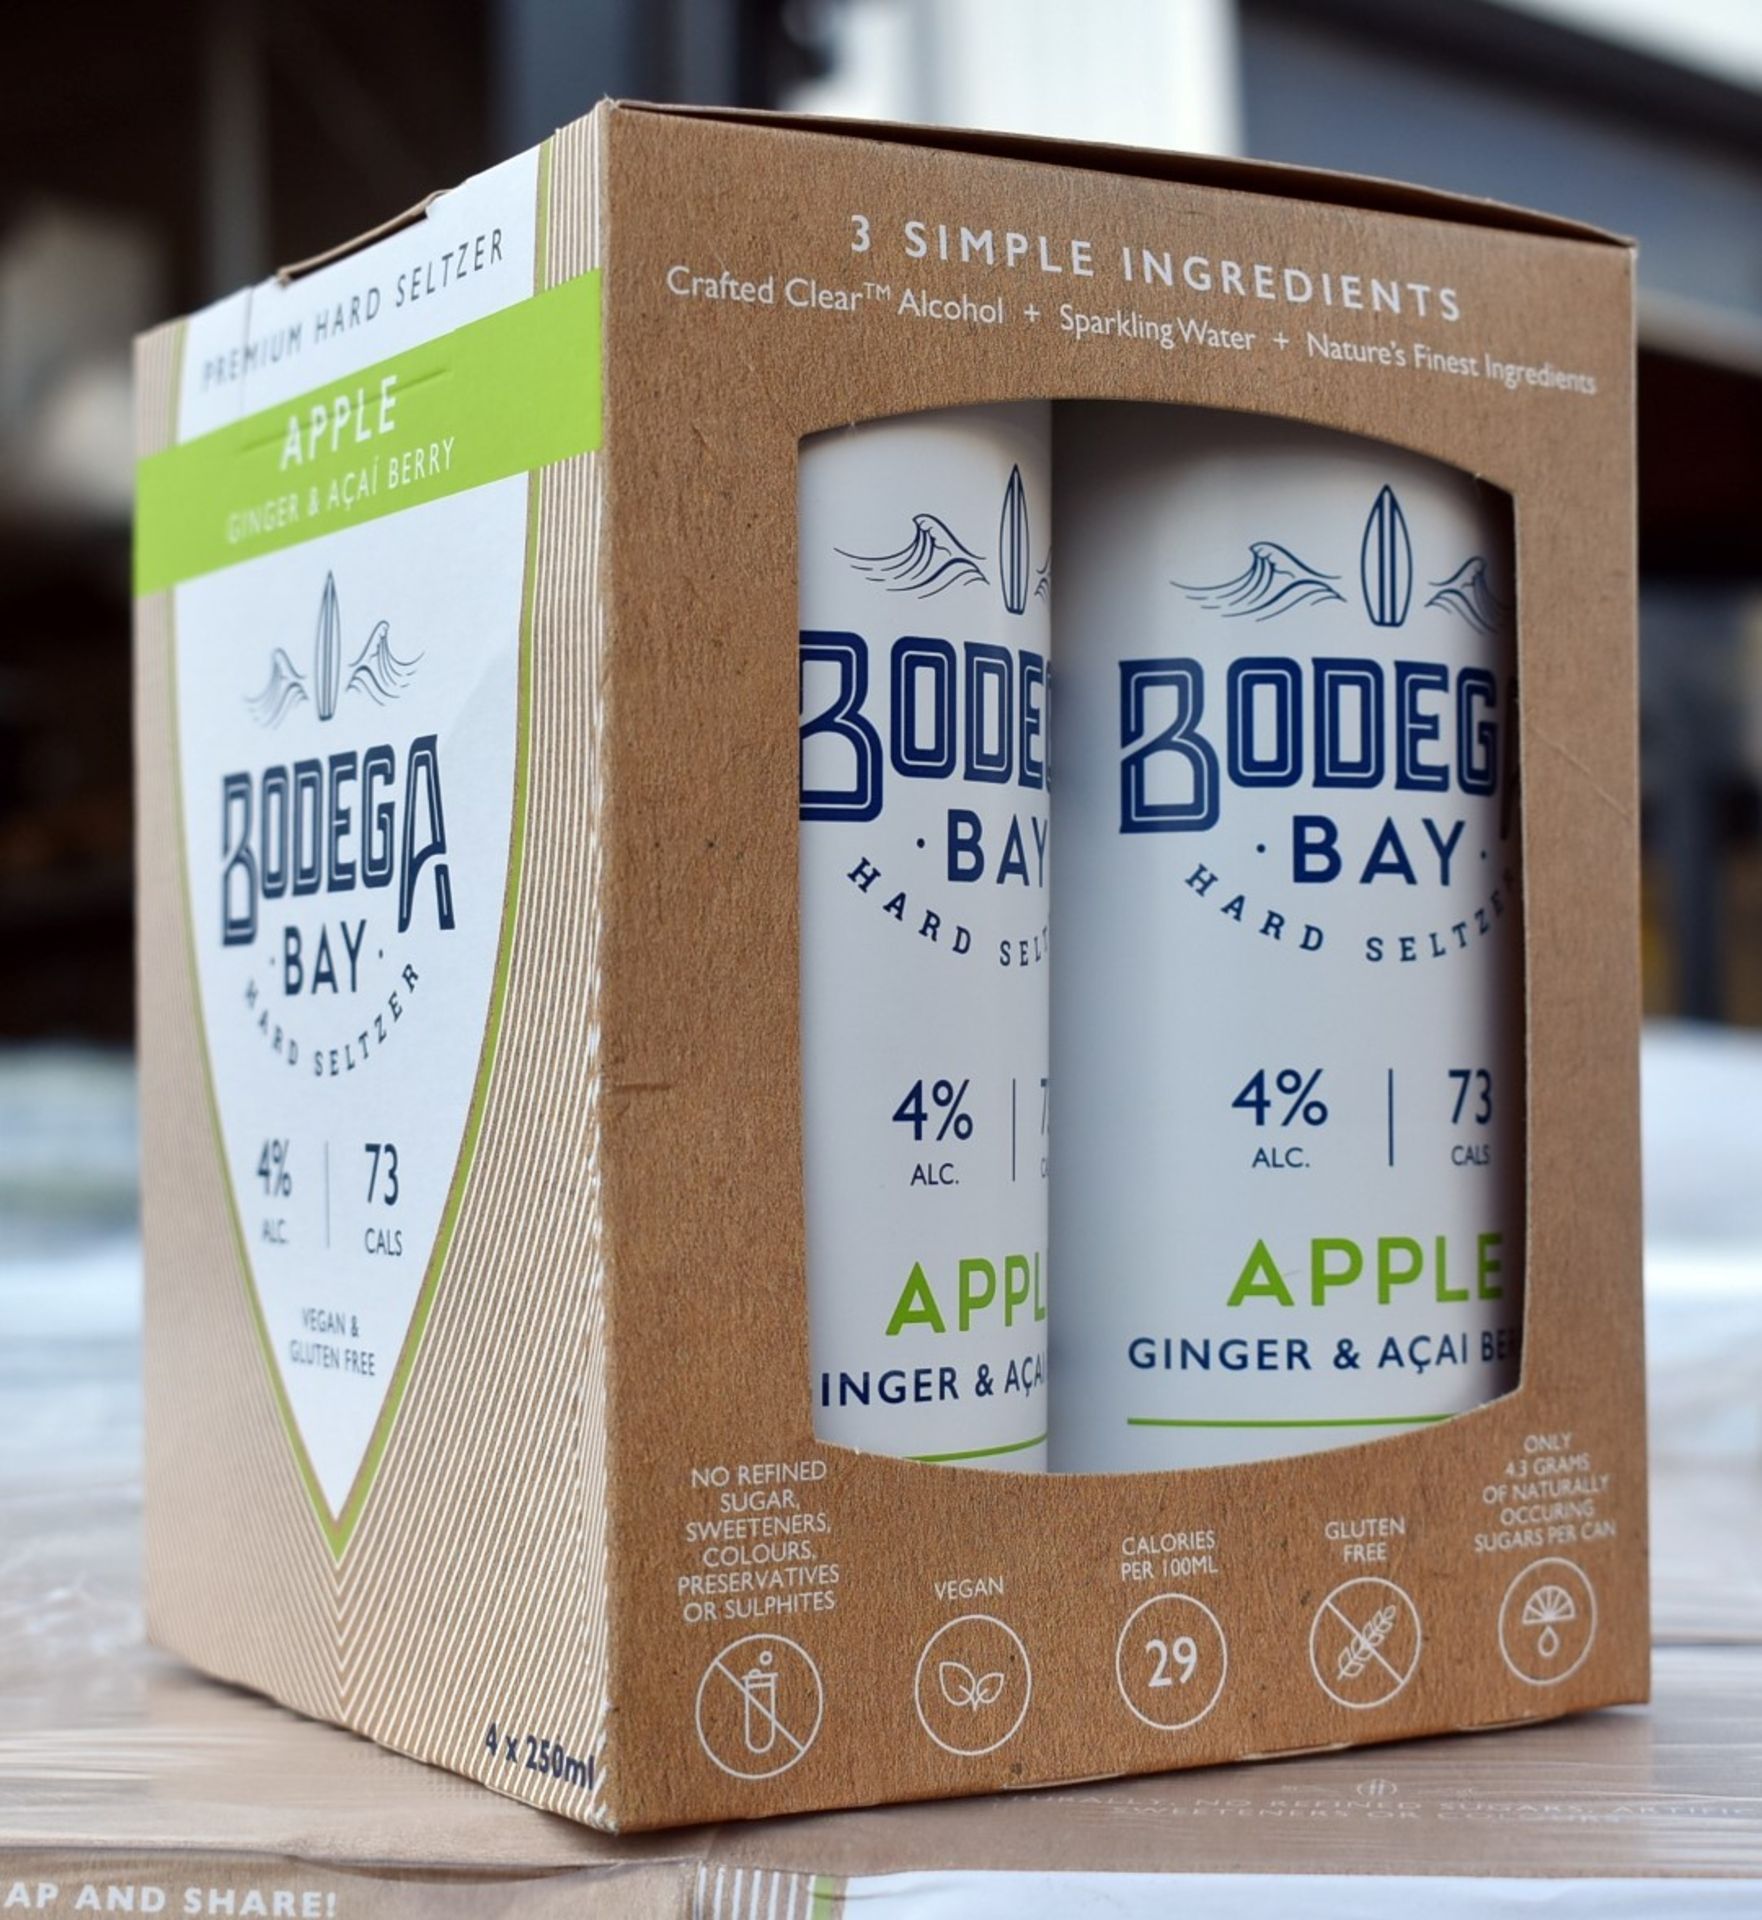 24 x Bodega Bay Hard Seltzer 250ml Alcoholic Sparkling Water Drinks - Apple Ginger & Acai Berry - 4% - Image 7 of 10